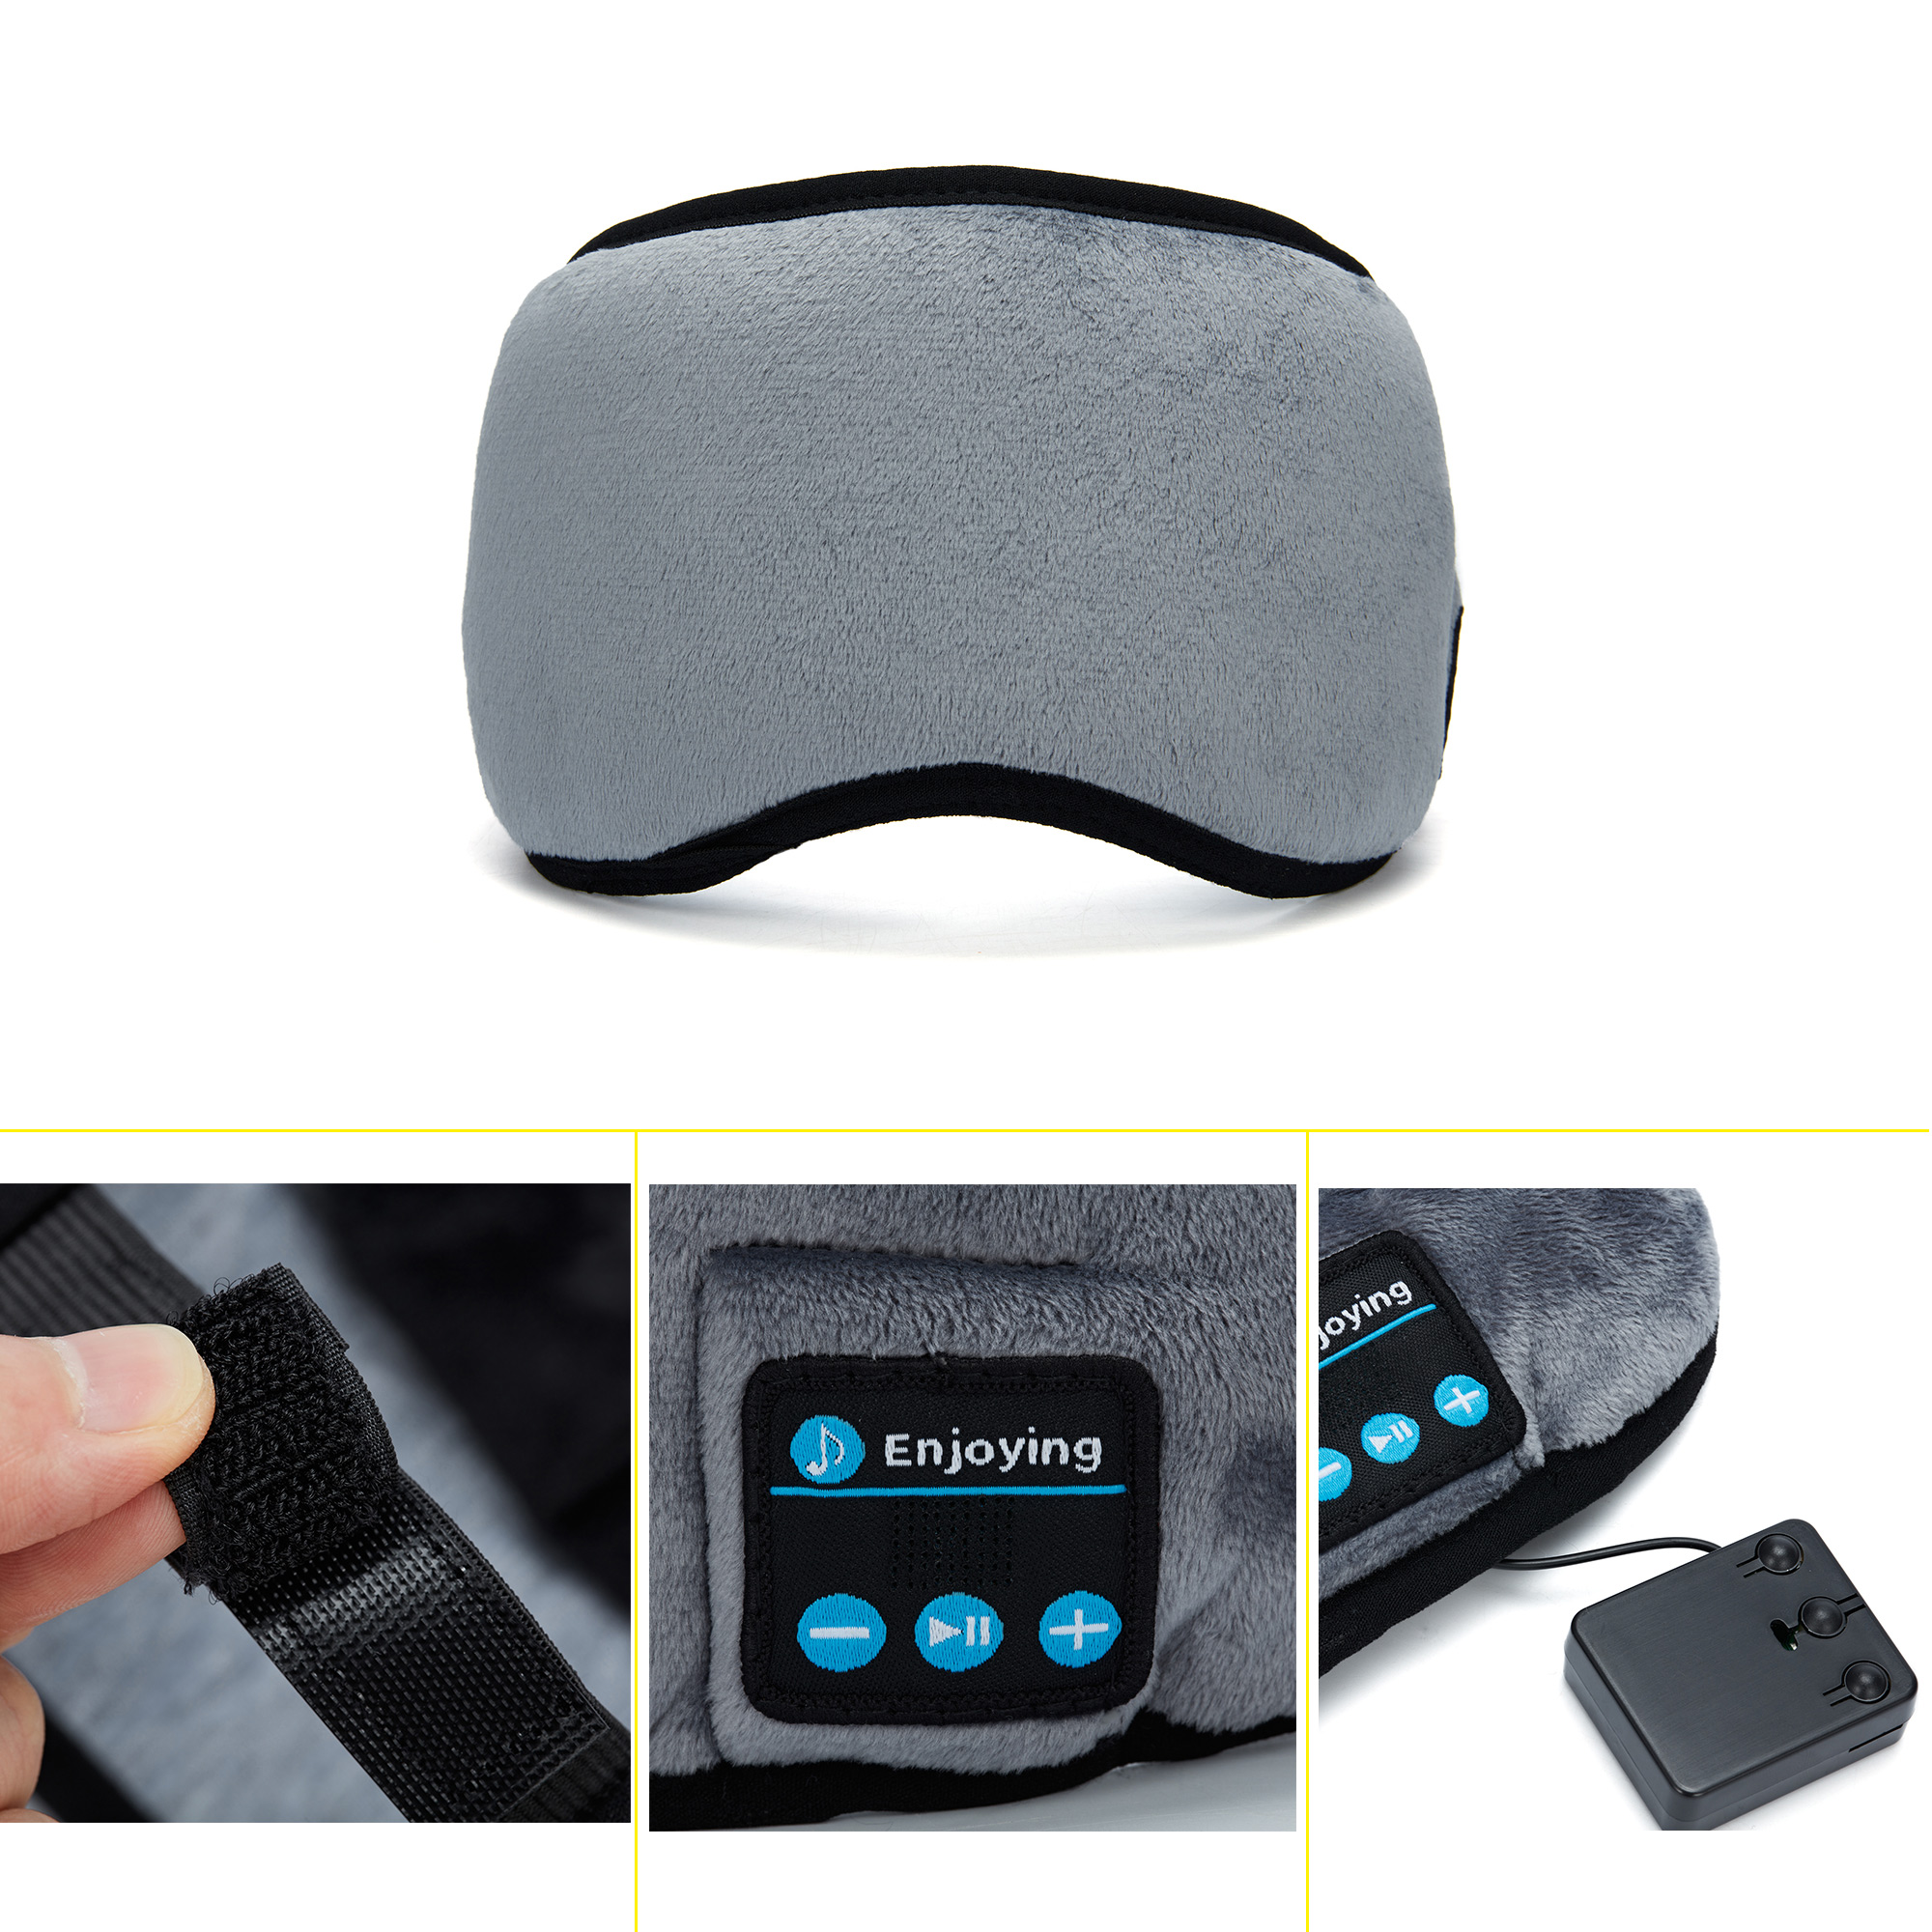 LELINTA Wireless bluetooth Eye Mask, Wireless bluetooth Headphones For Sleep, Travel Music Eye Cover bluetooth Headsets with Microphone Handsfree,Gray/Black - image 2 of 8